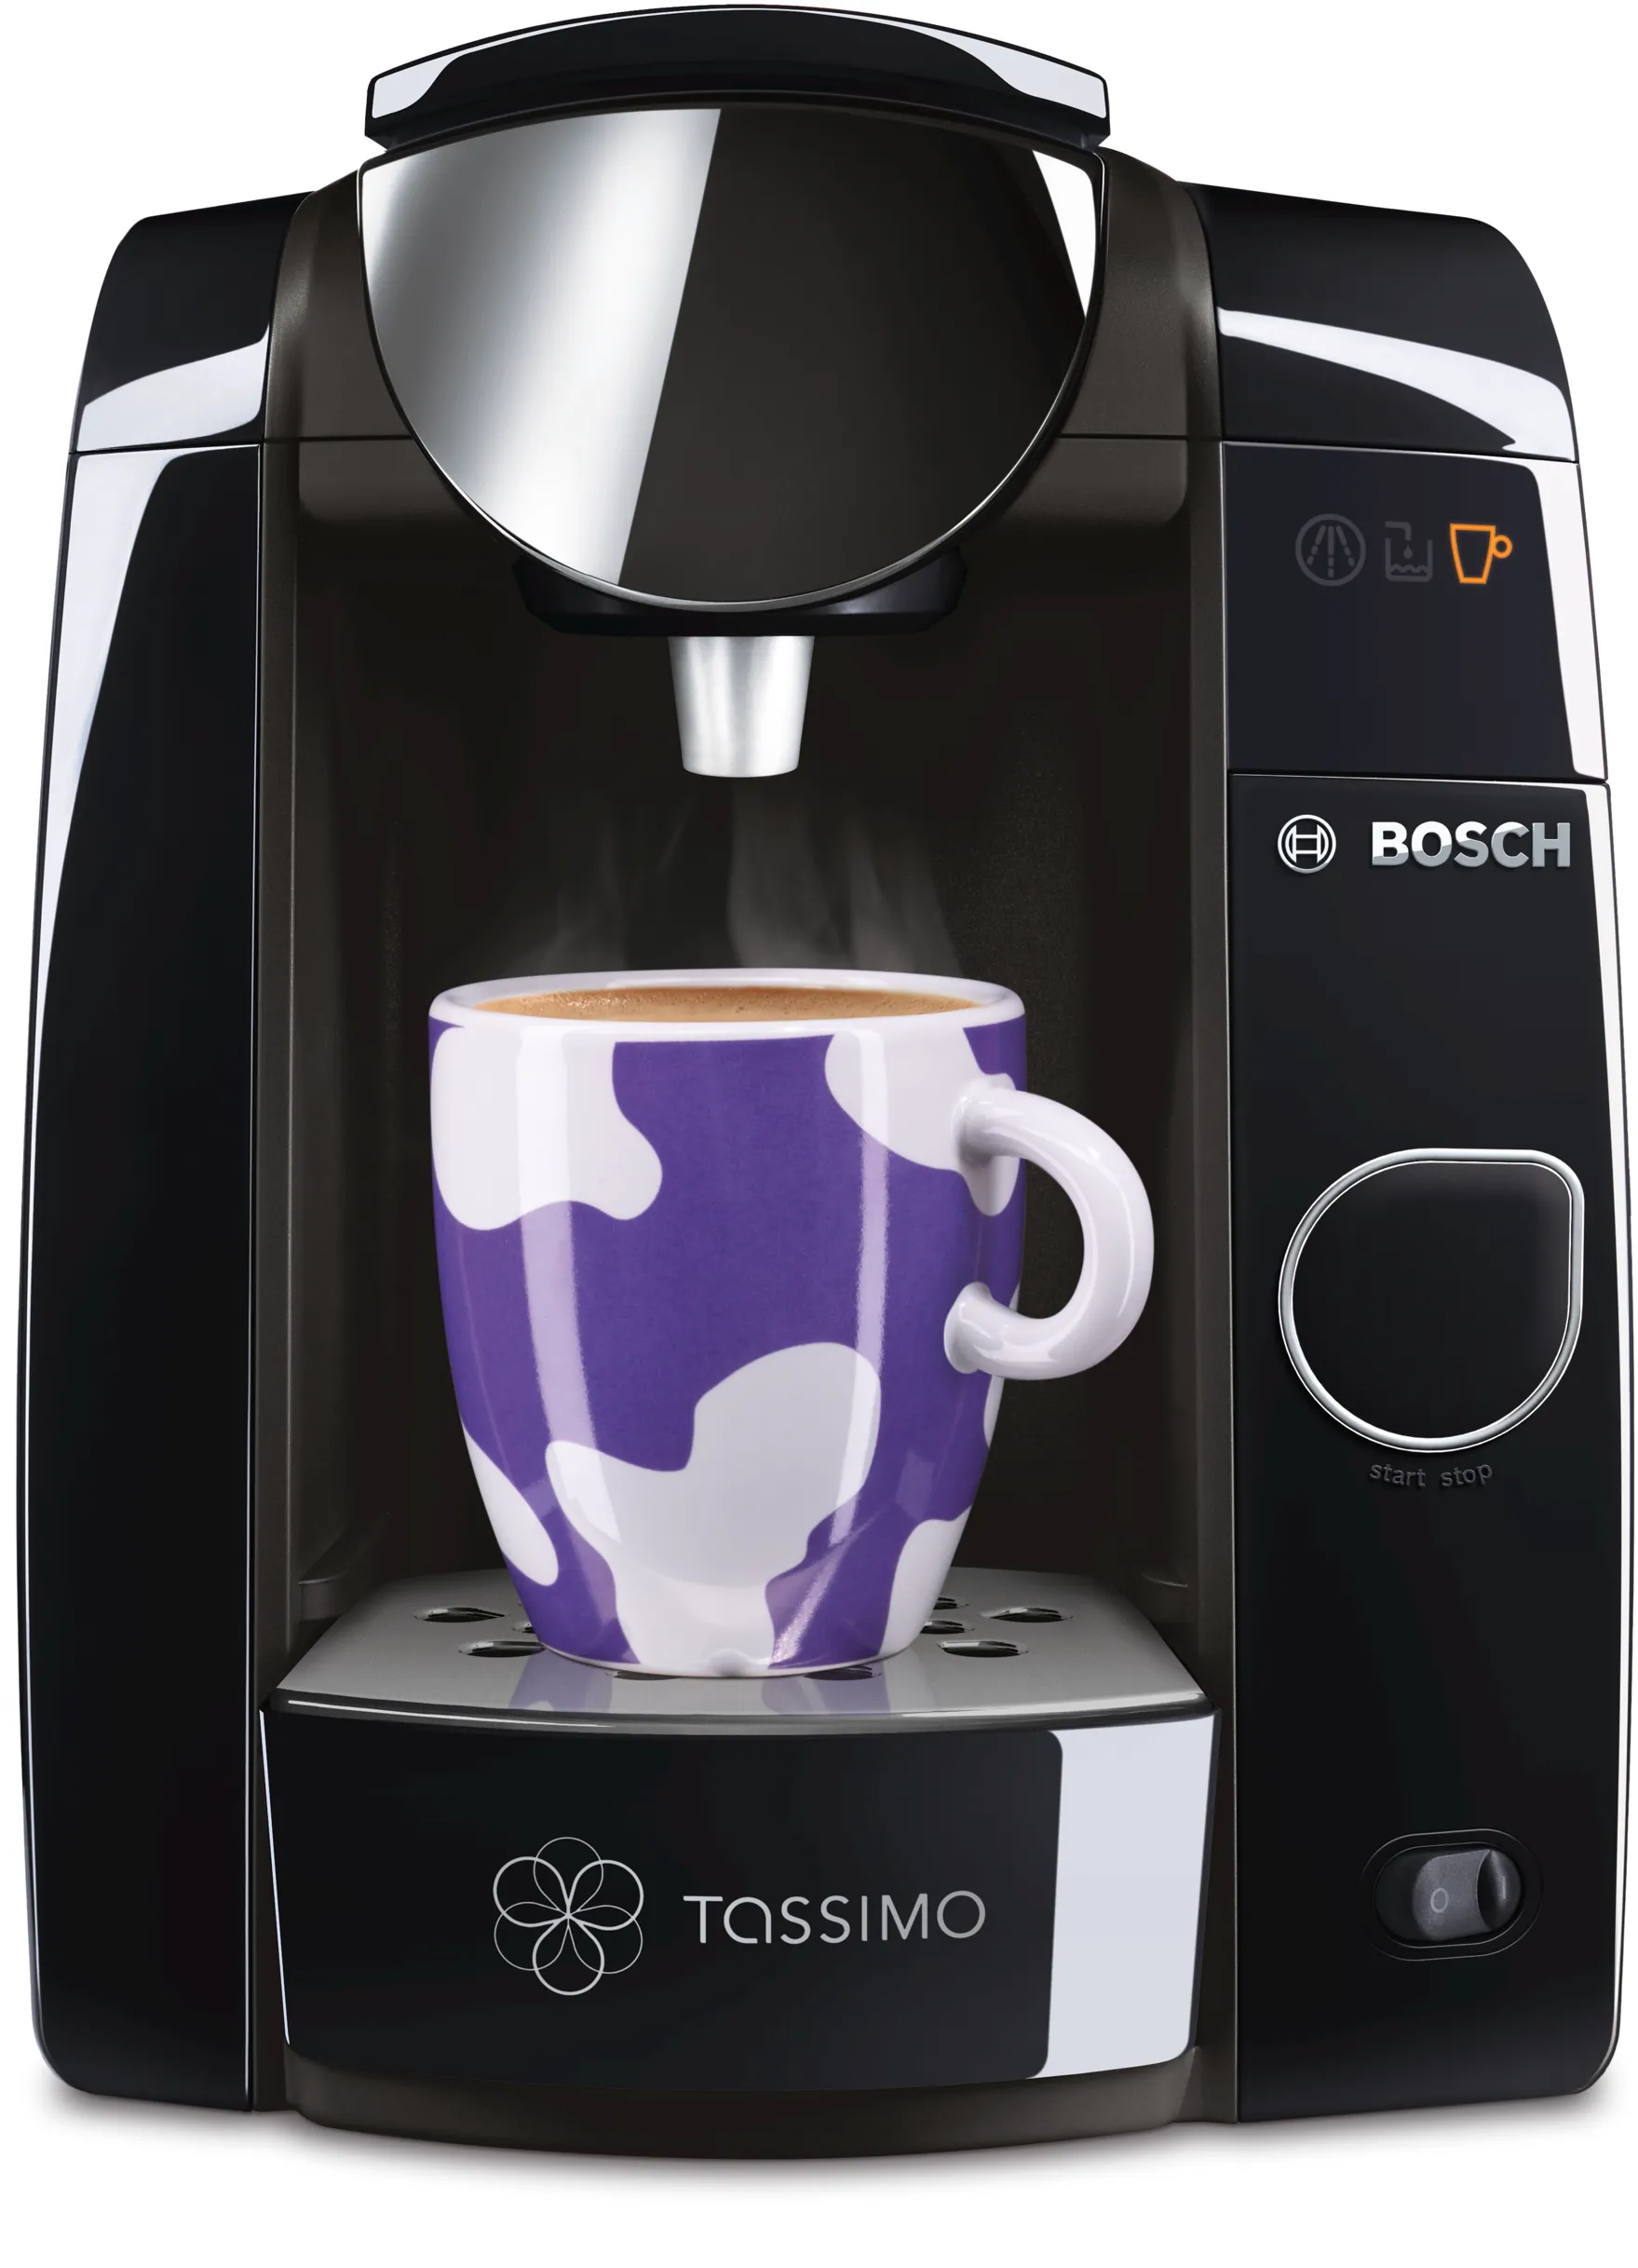 Bosch Tassimo Machine TAS 45 for Making Coffee, Lattes